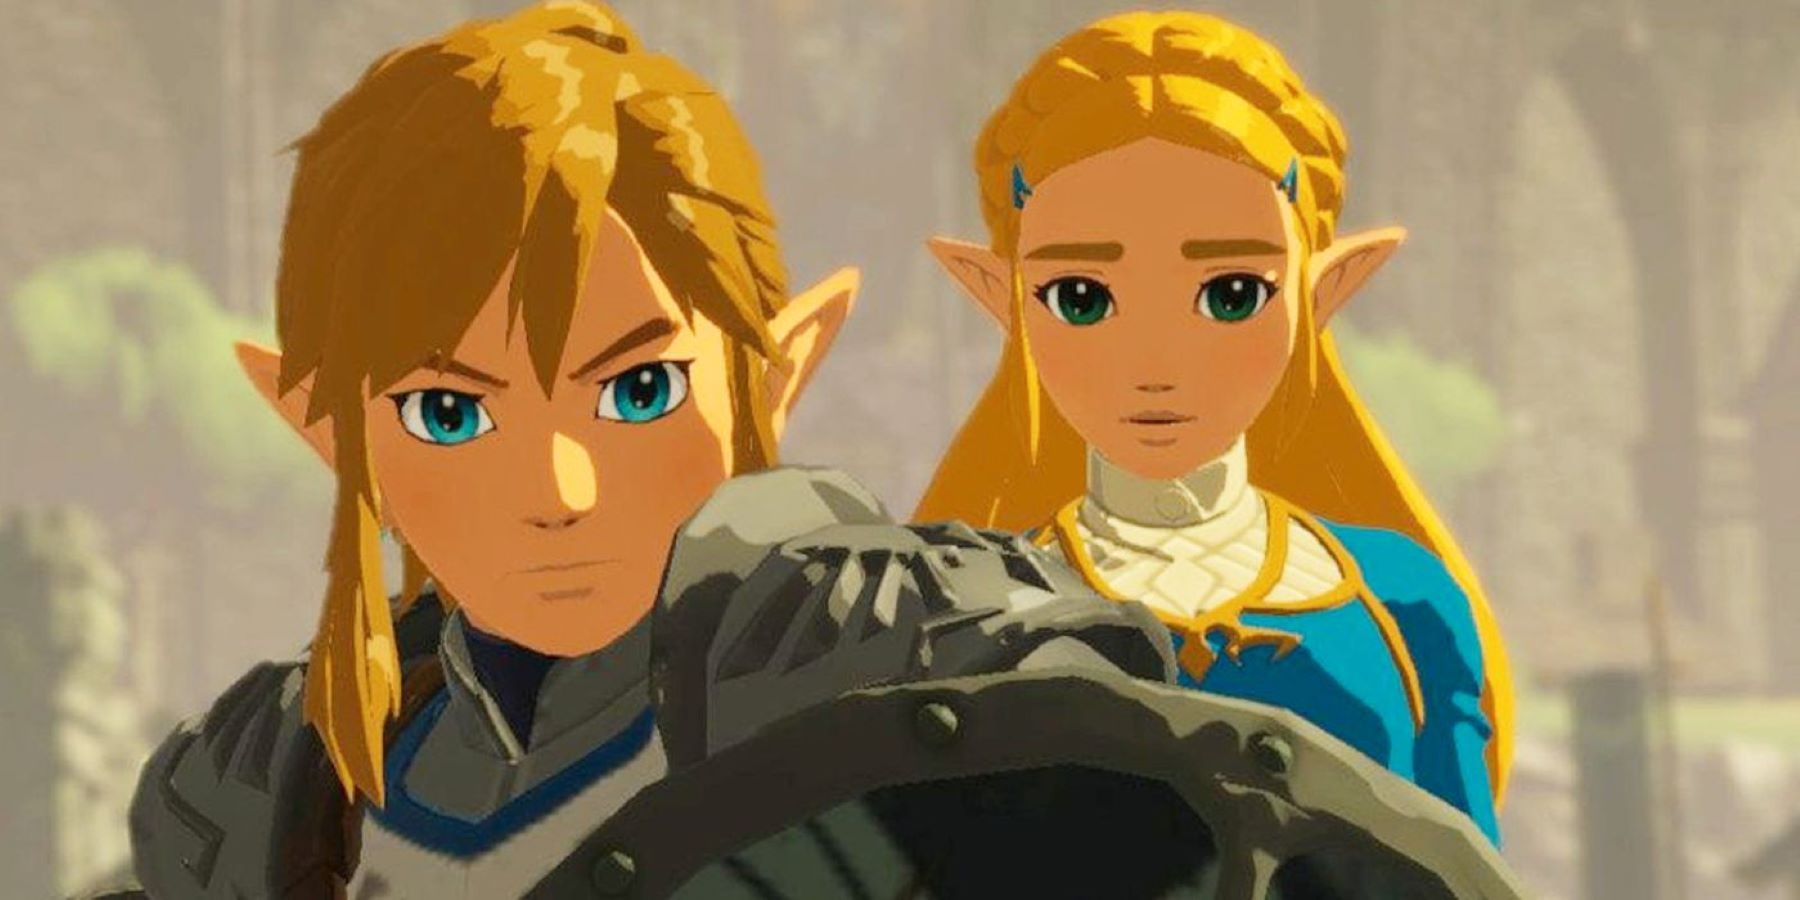 Link wearing Soldier's Armor and standing in front of Princess Zelda in The Legend of Zelda: Breath of the Wild